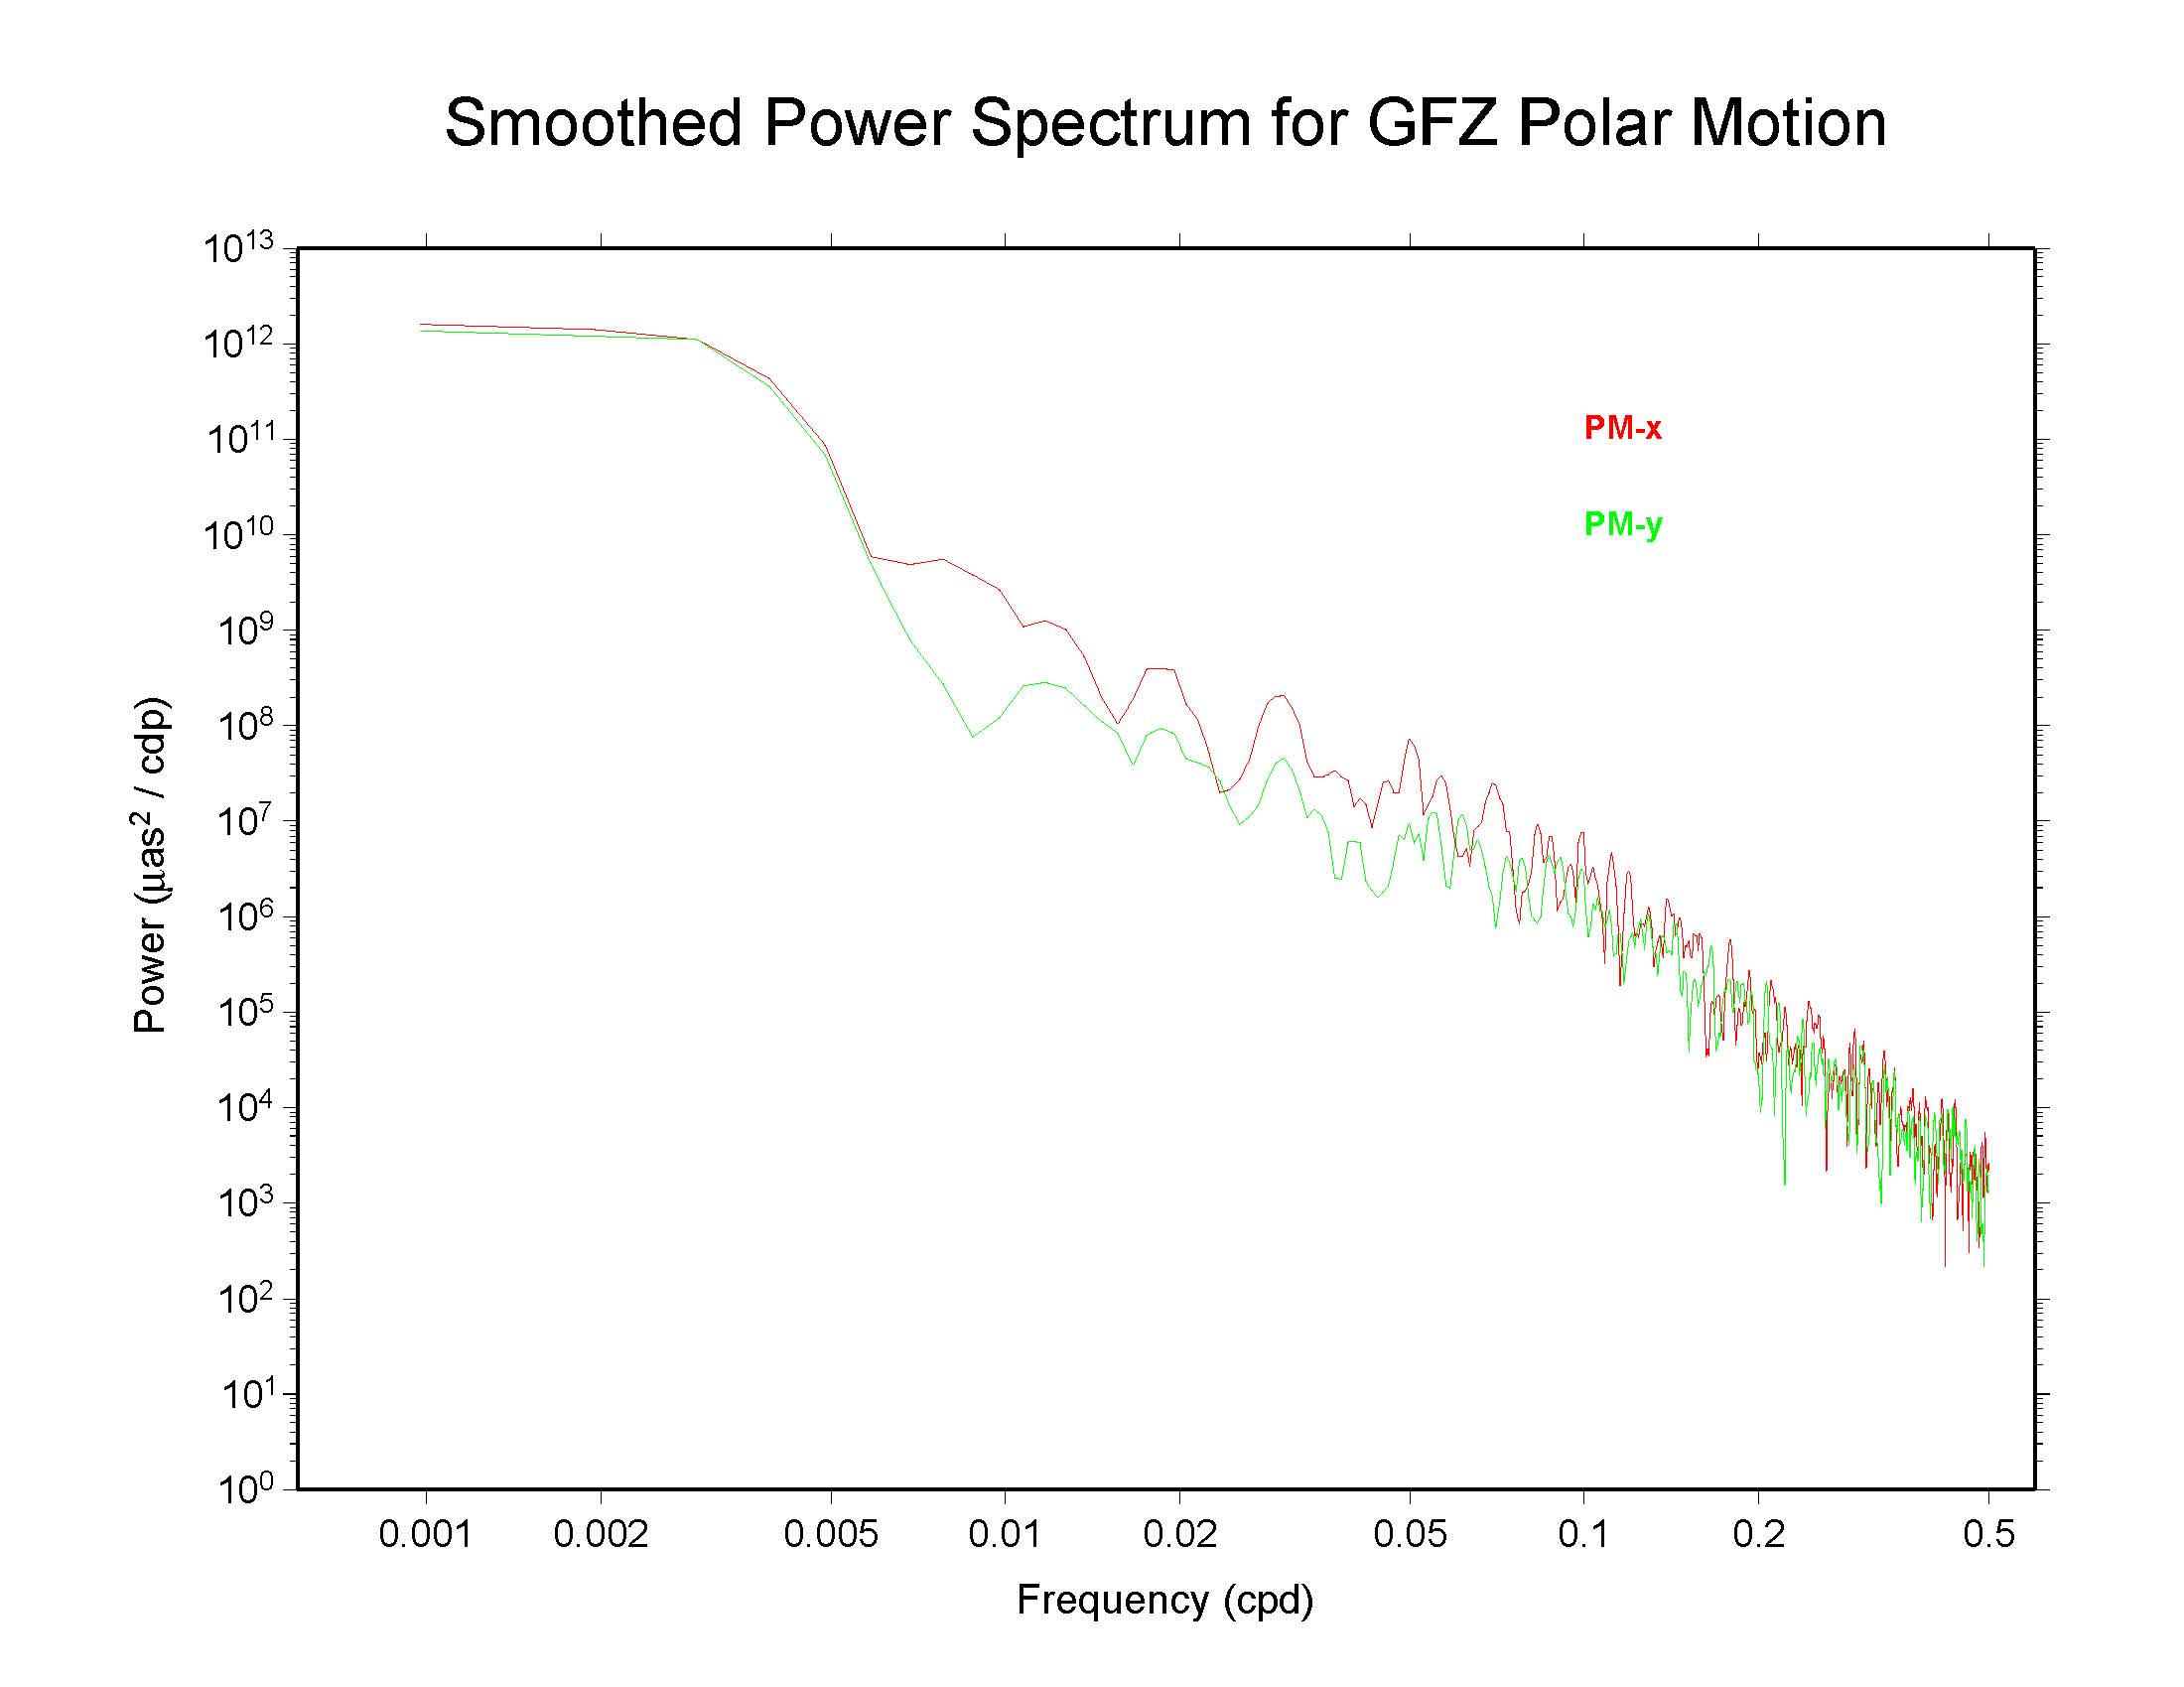 GFZ polar motion spectra